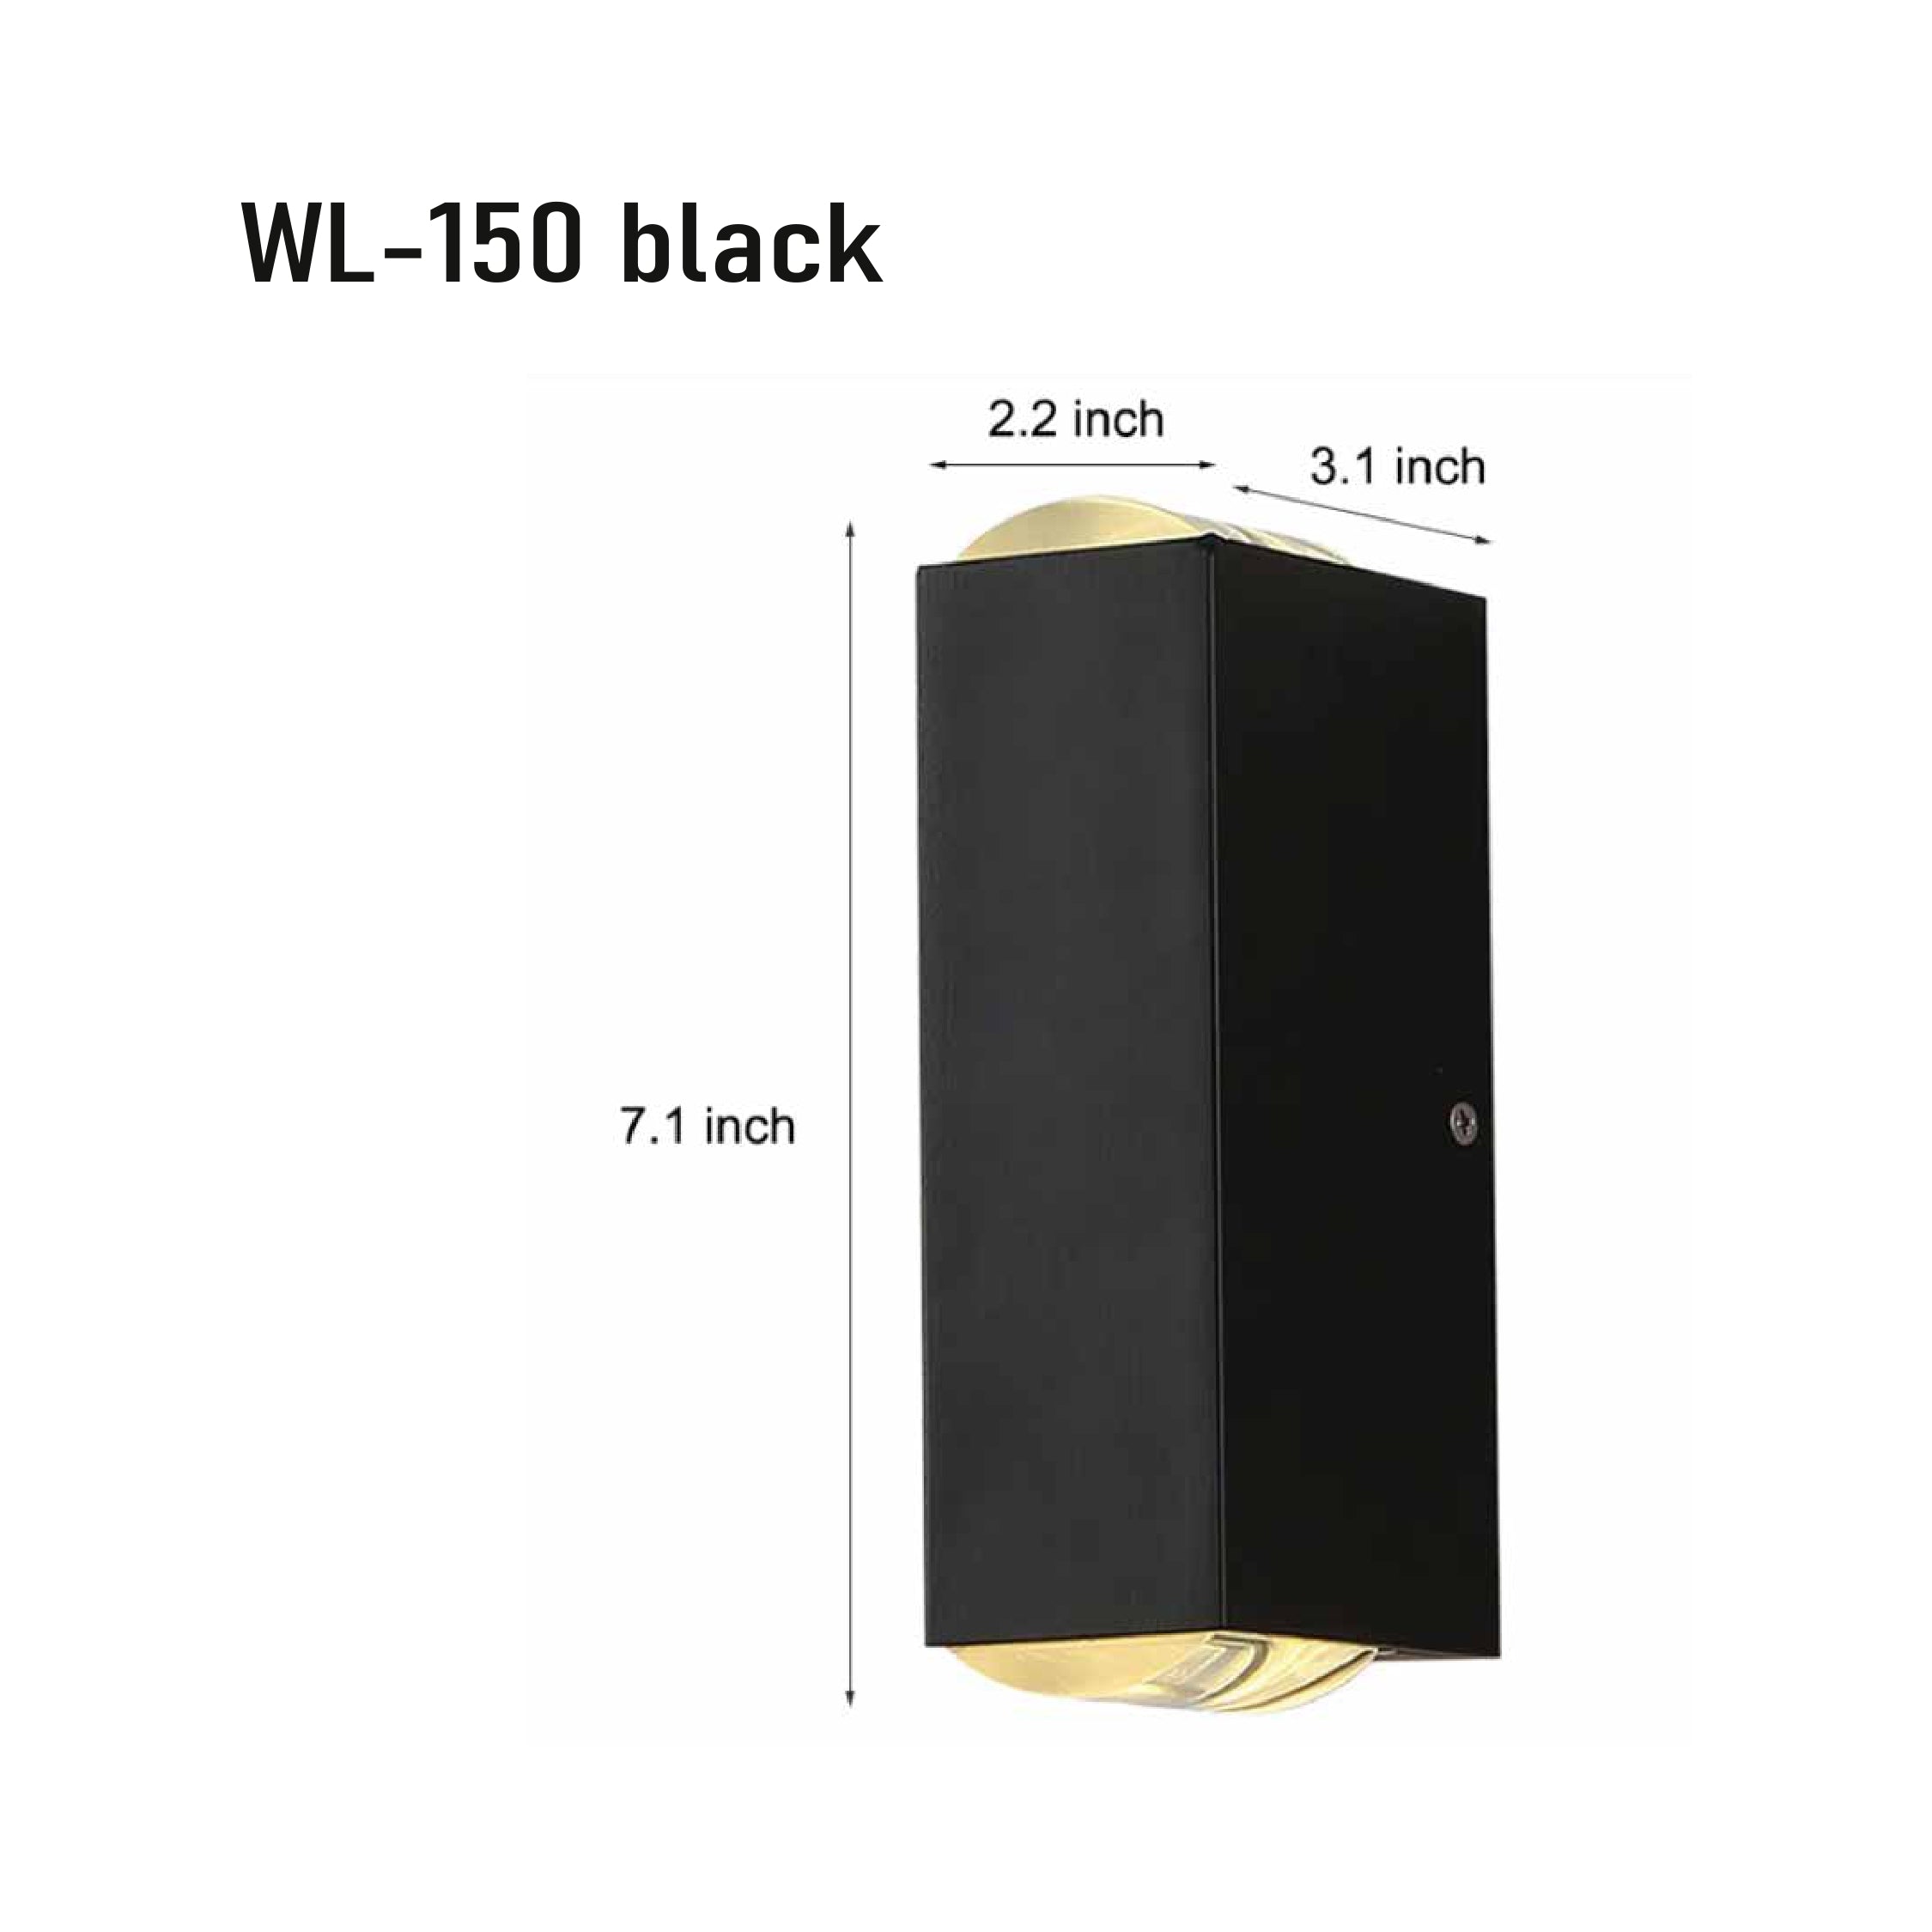 LED Outdoor Wall Light | WL-150 Black